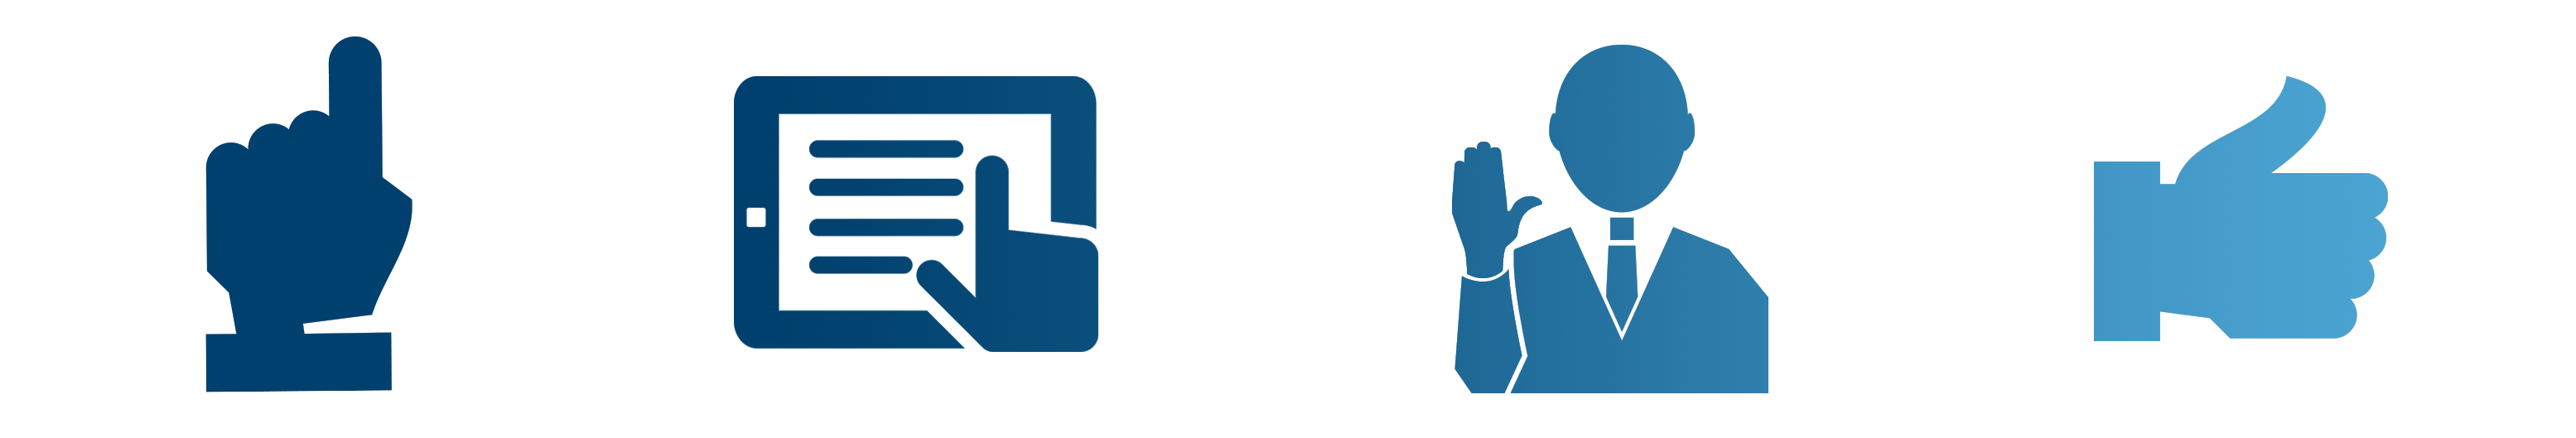 Sign Language icons